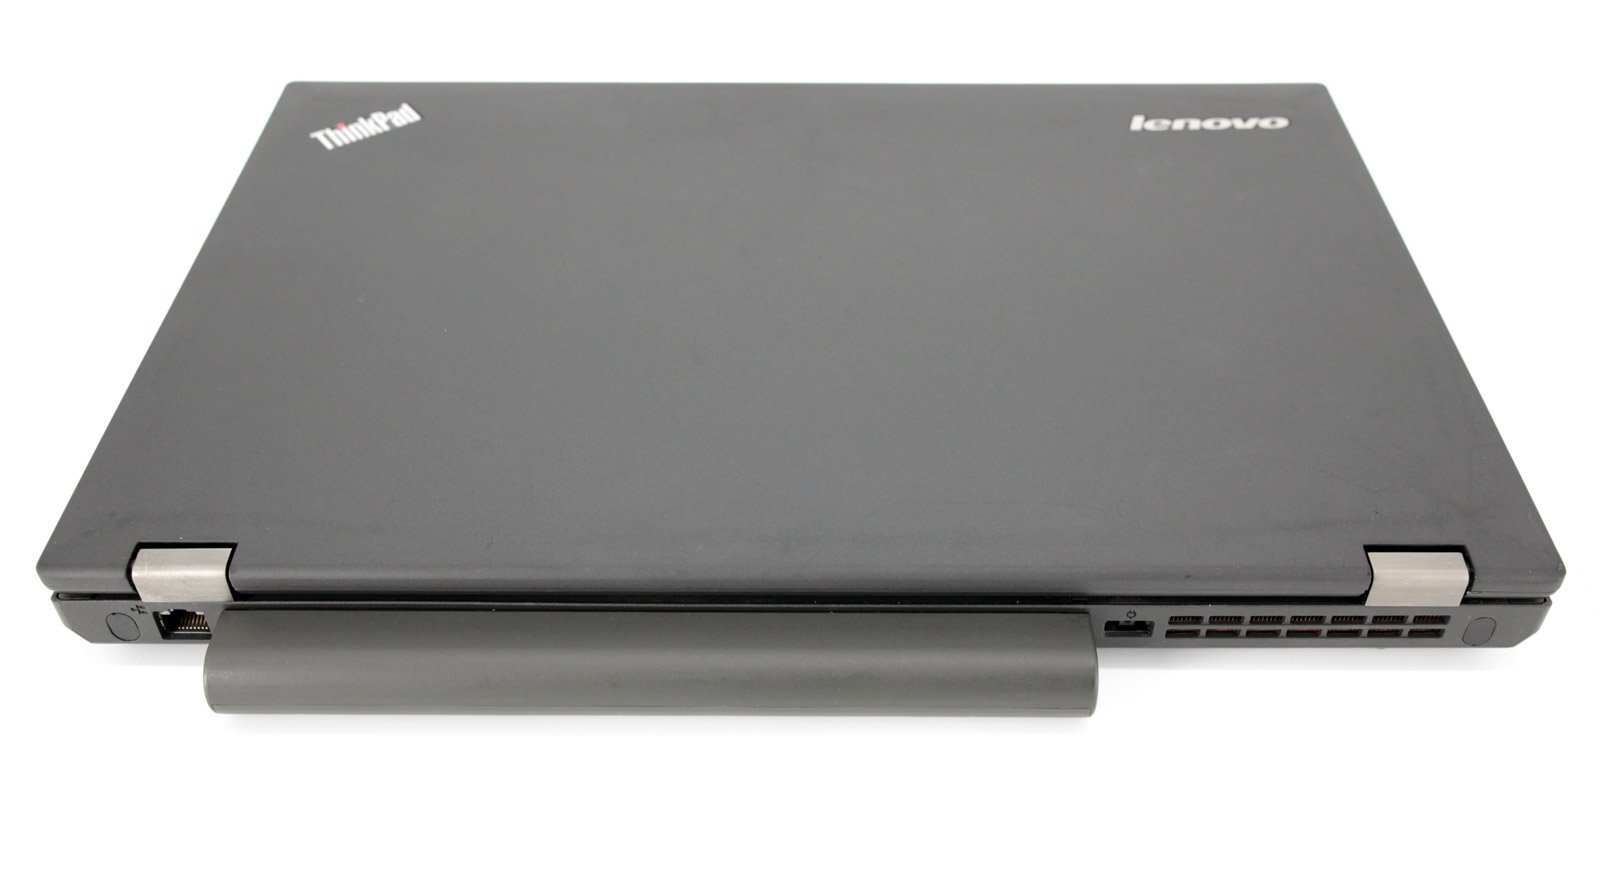 Lenovo ThinkPad W541 15.6 Laptop: 4th Gen i7, 12GB RAM, 240GB SSD, K1100M, VAT - CruiseTech